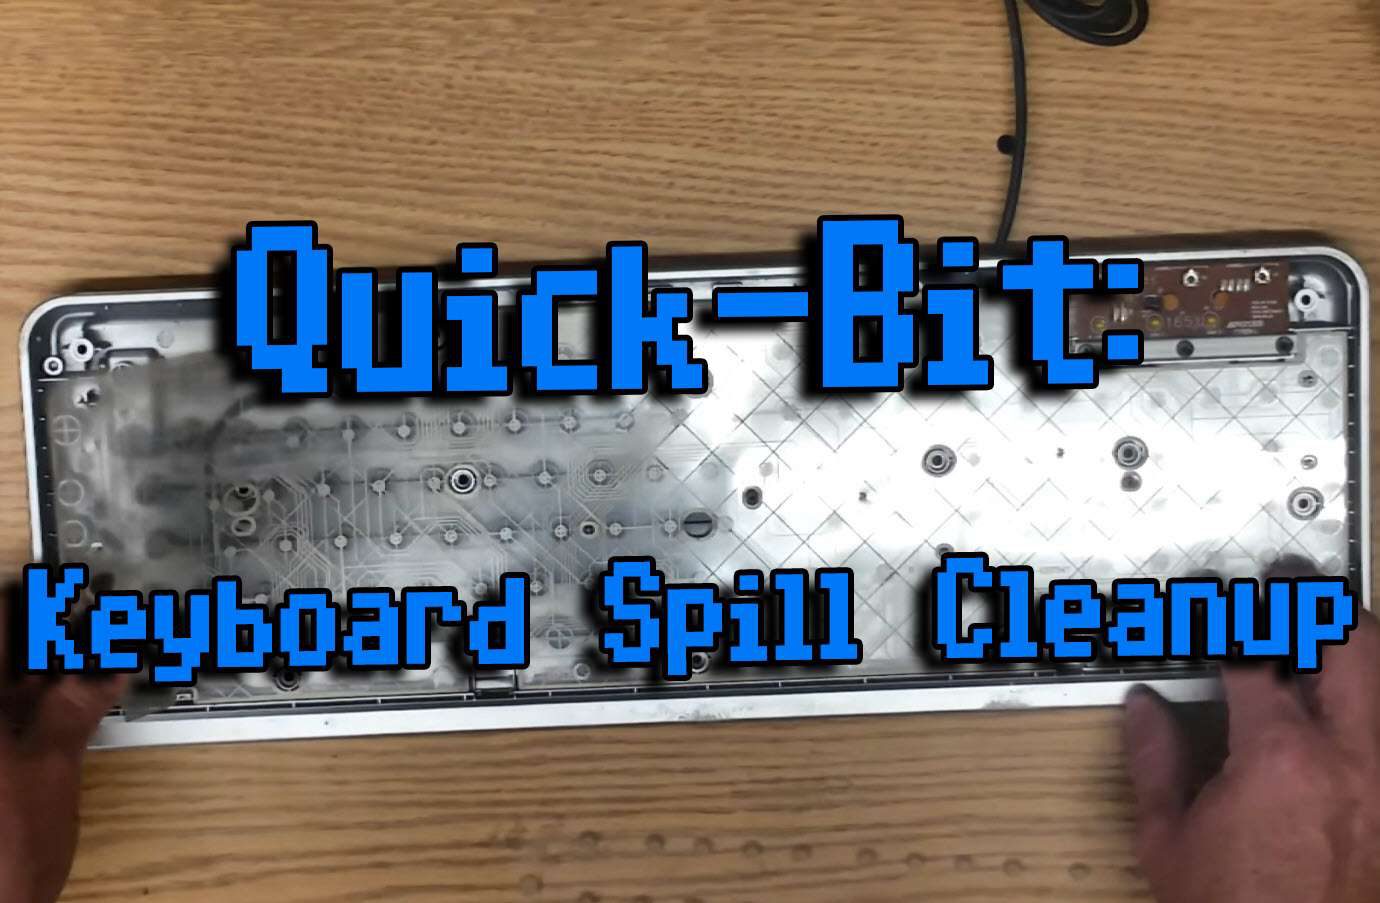 Quick-Bit: Keyboard Spill Cleanup